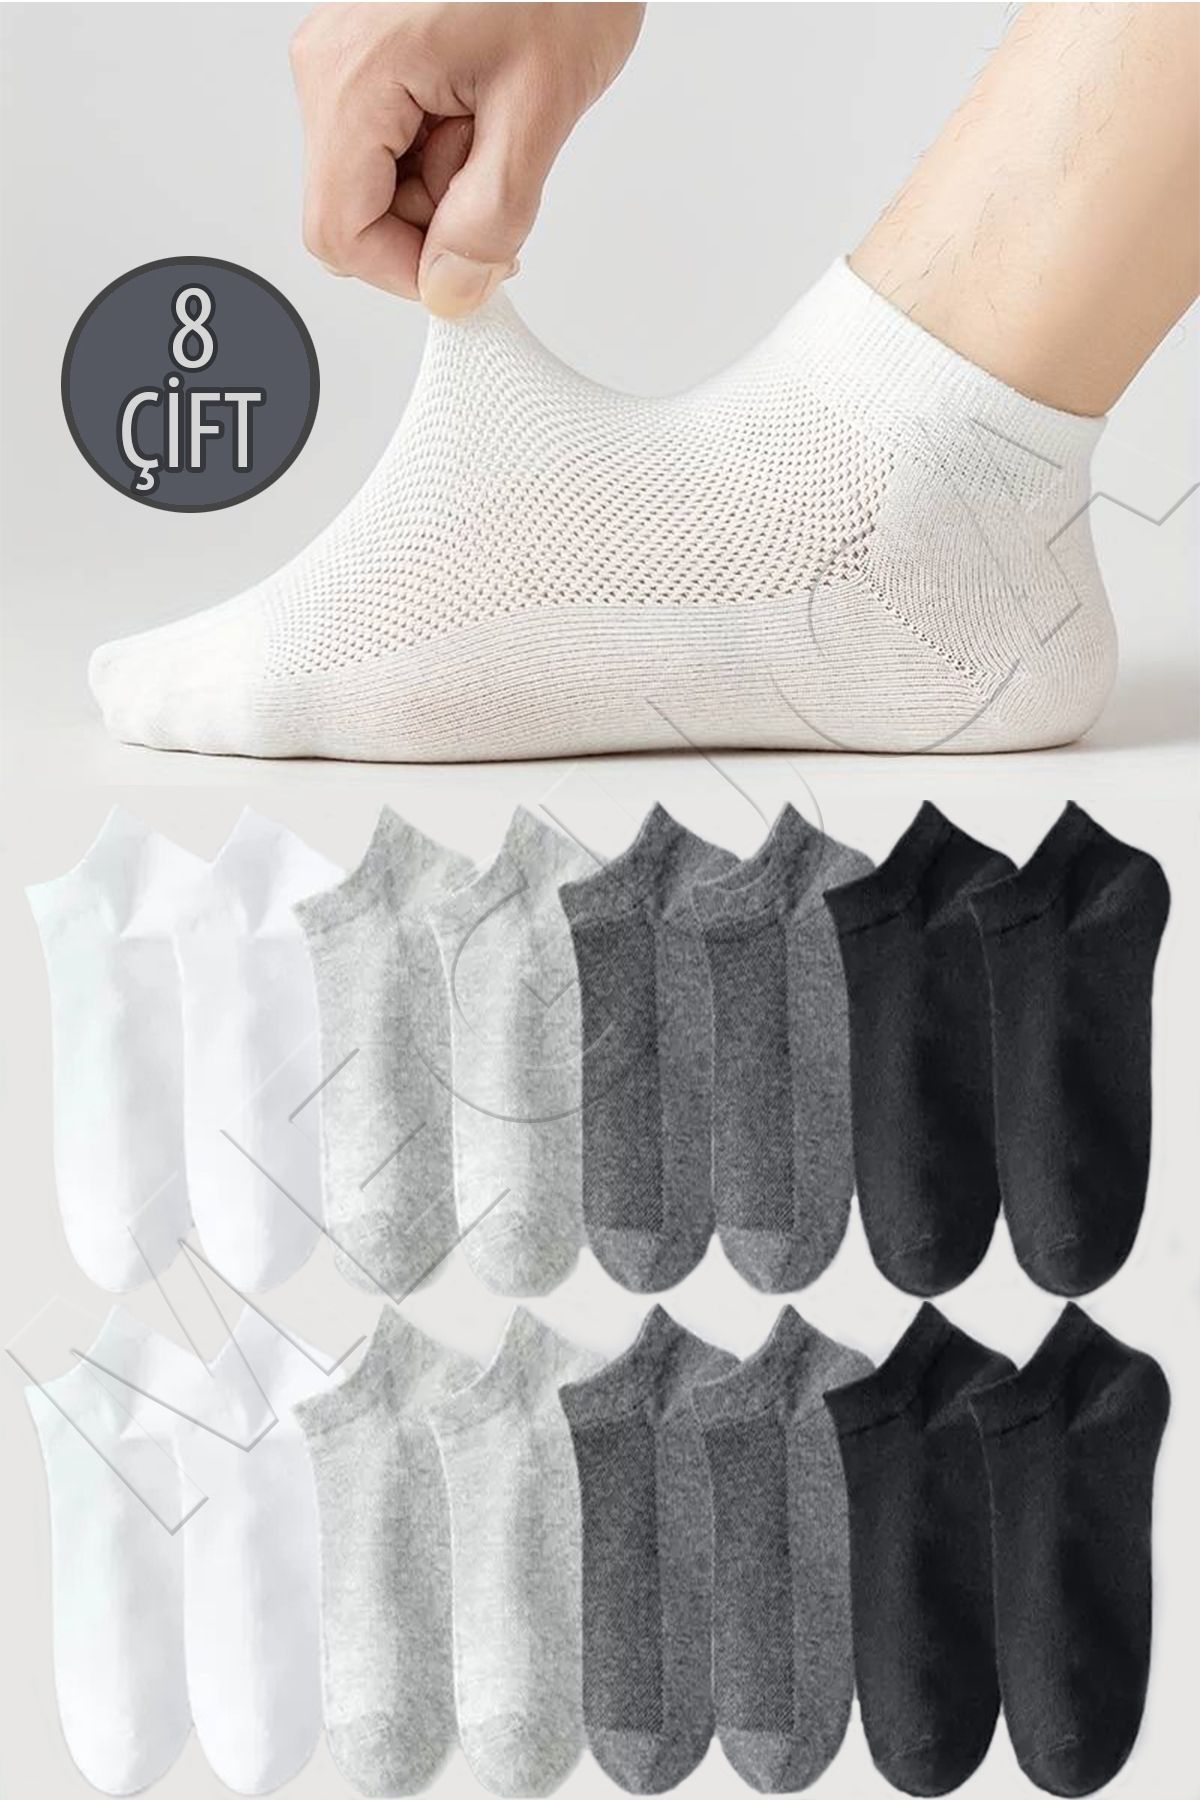 Meguca Socks Unisex Comfort Pamuklu Terletmez Patik Çorap Seti 8 Çift